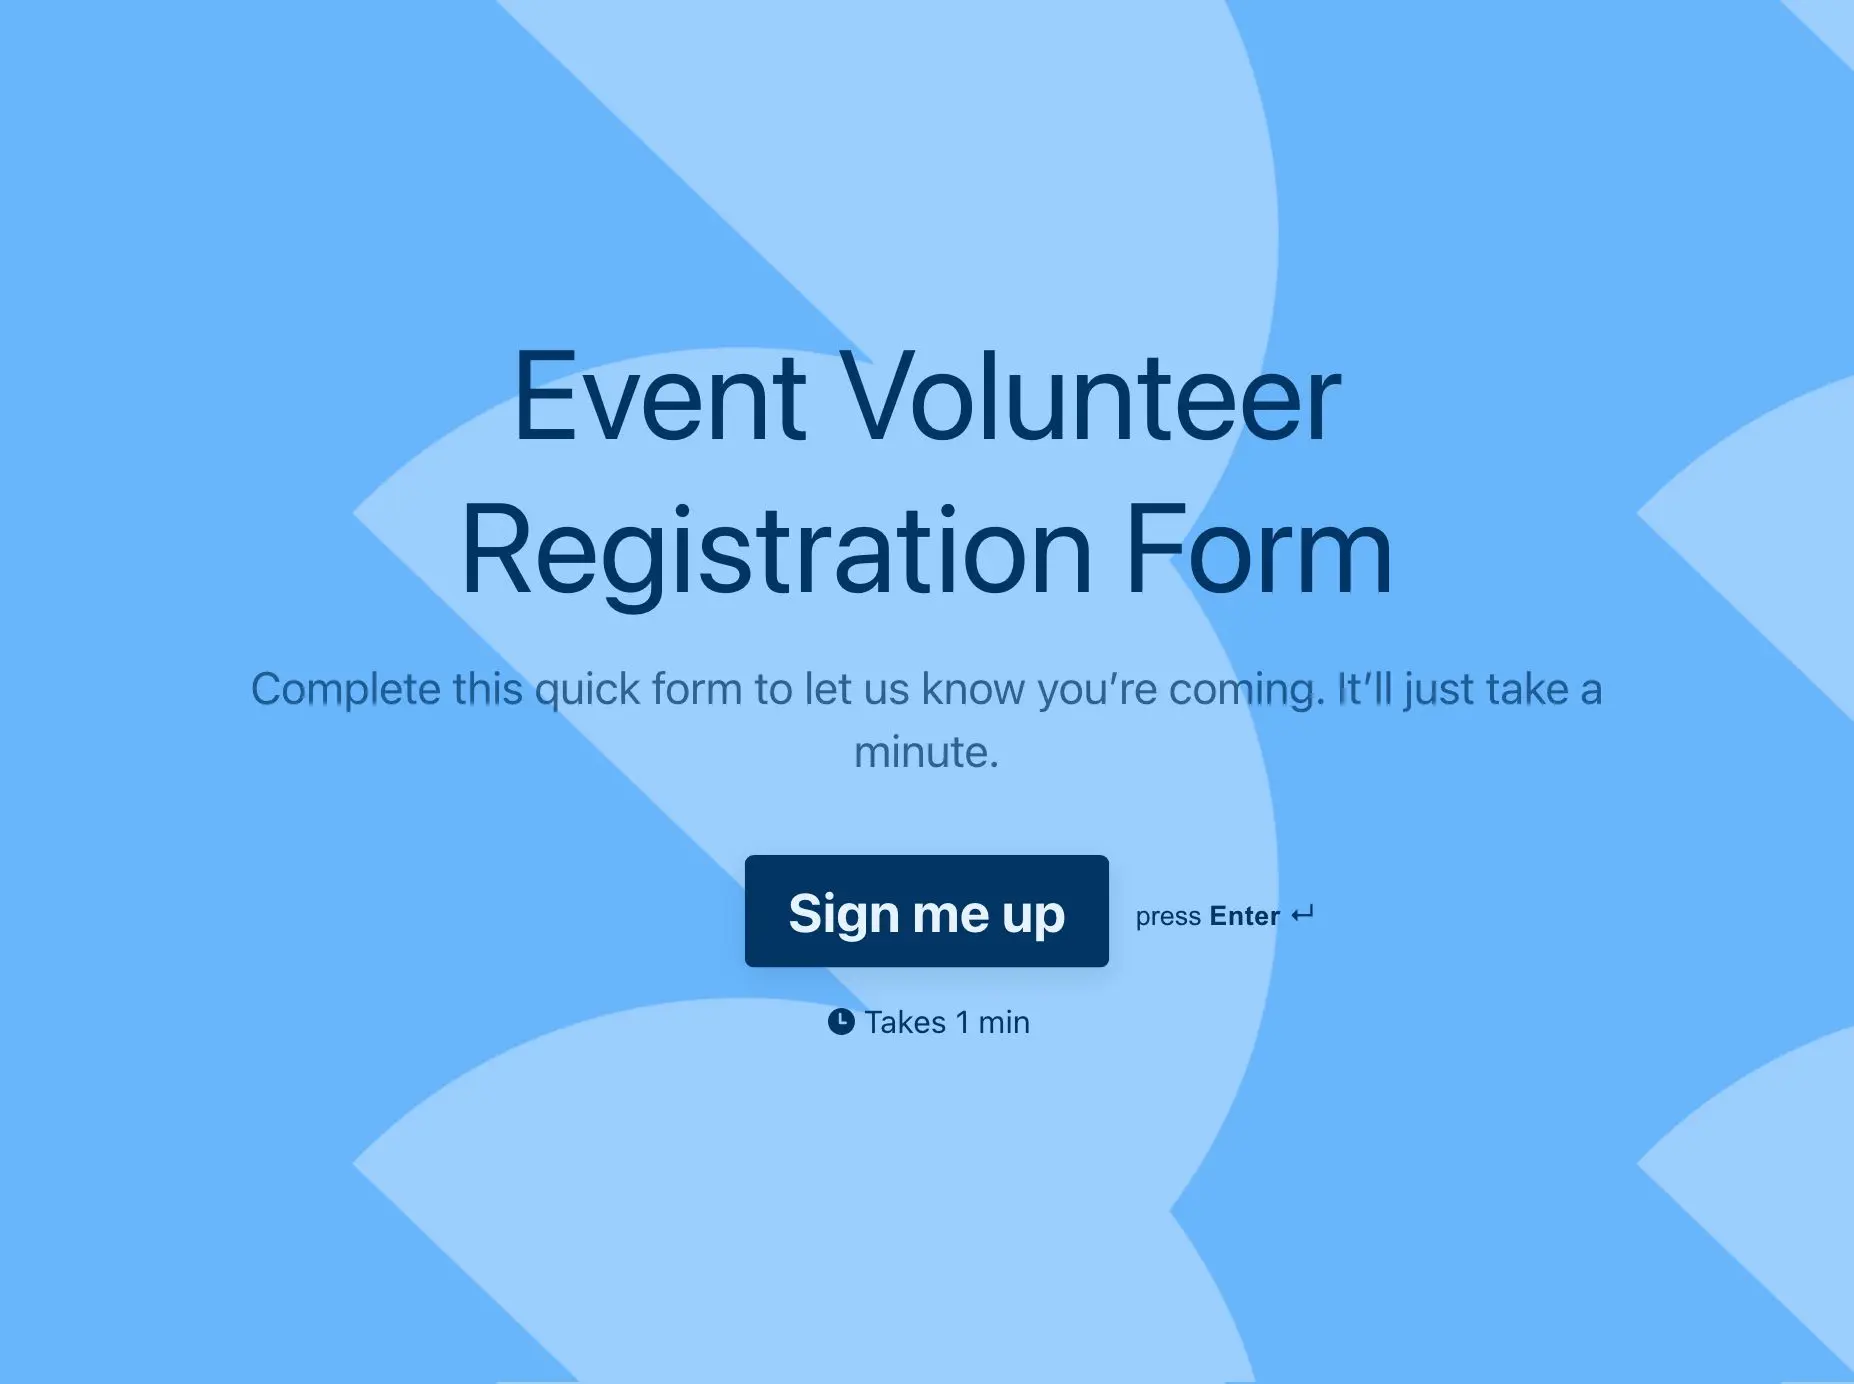 Event Volunteer Registration Form Template Hero